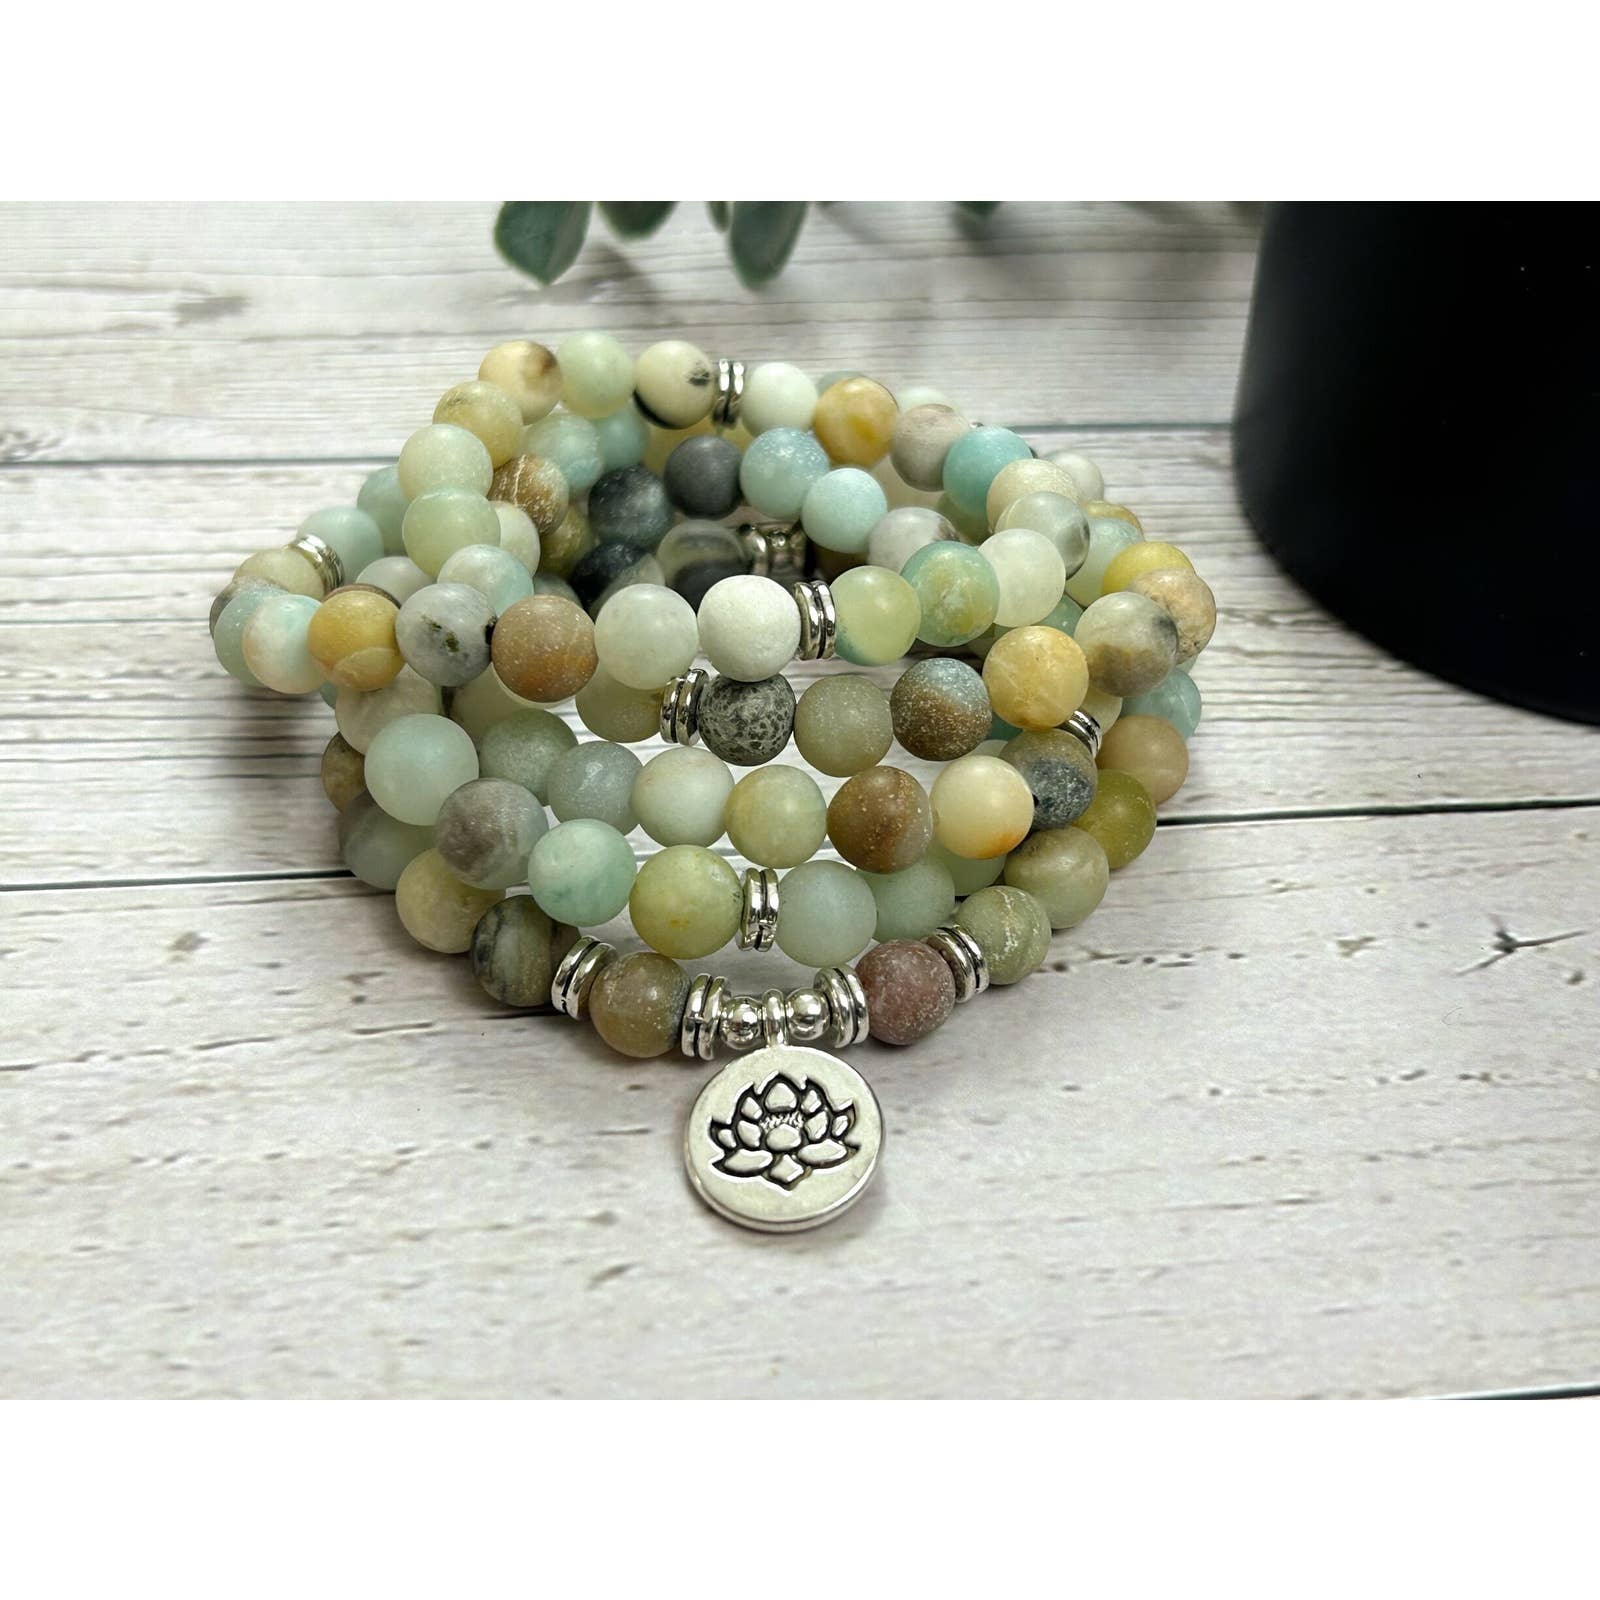 108 Mala Beads Necklace - Amazonite Necklace Prayer Beads - 108 Mala Beads Bracelet